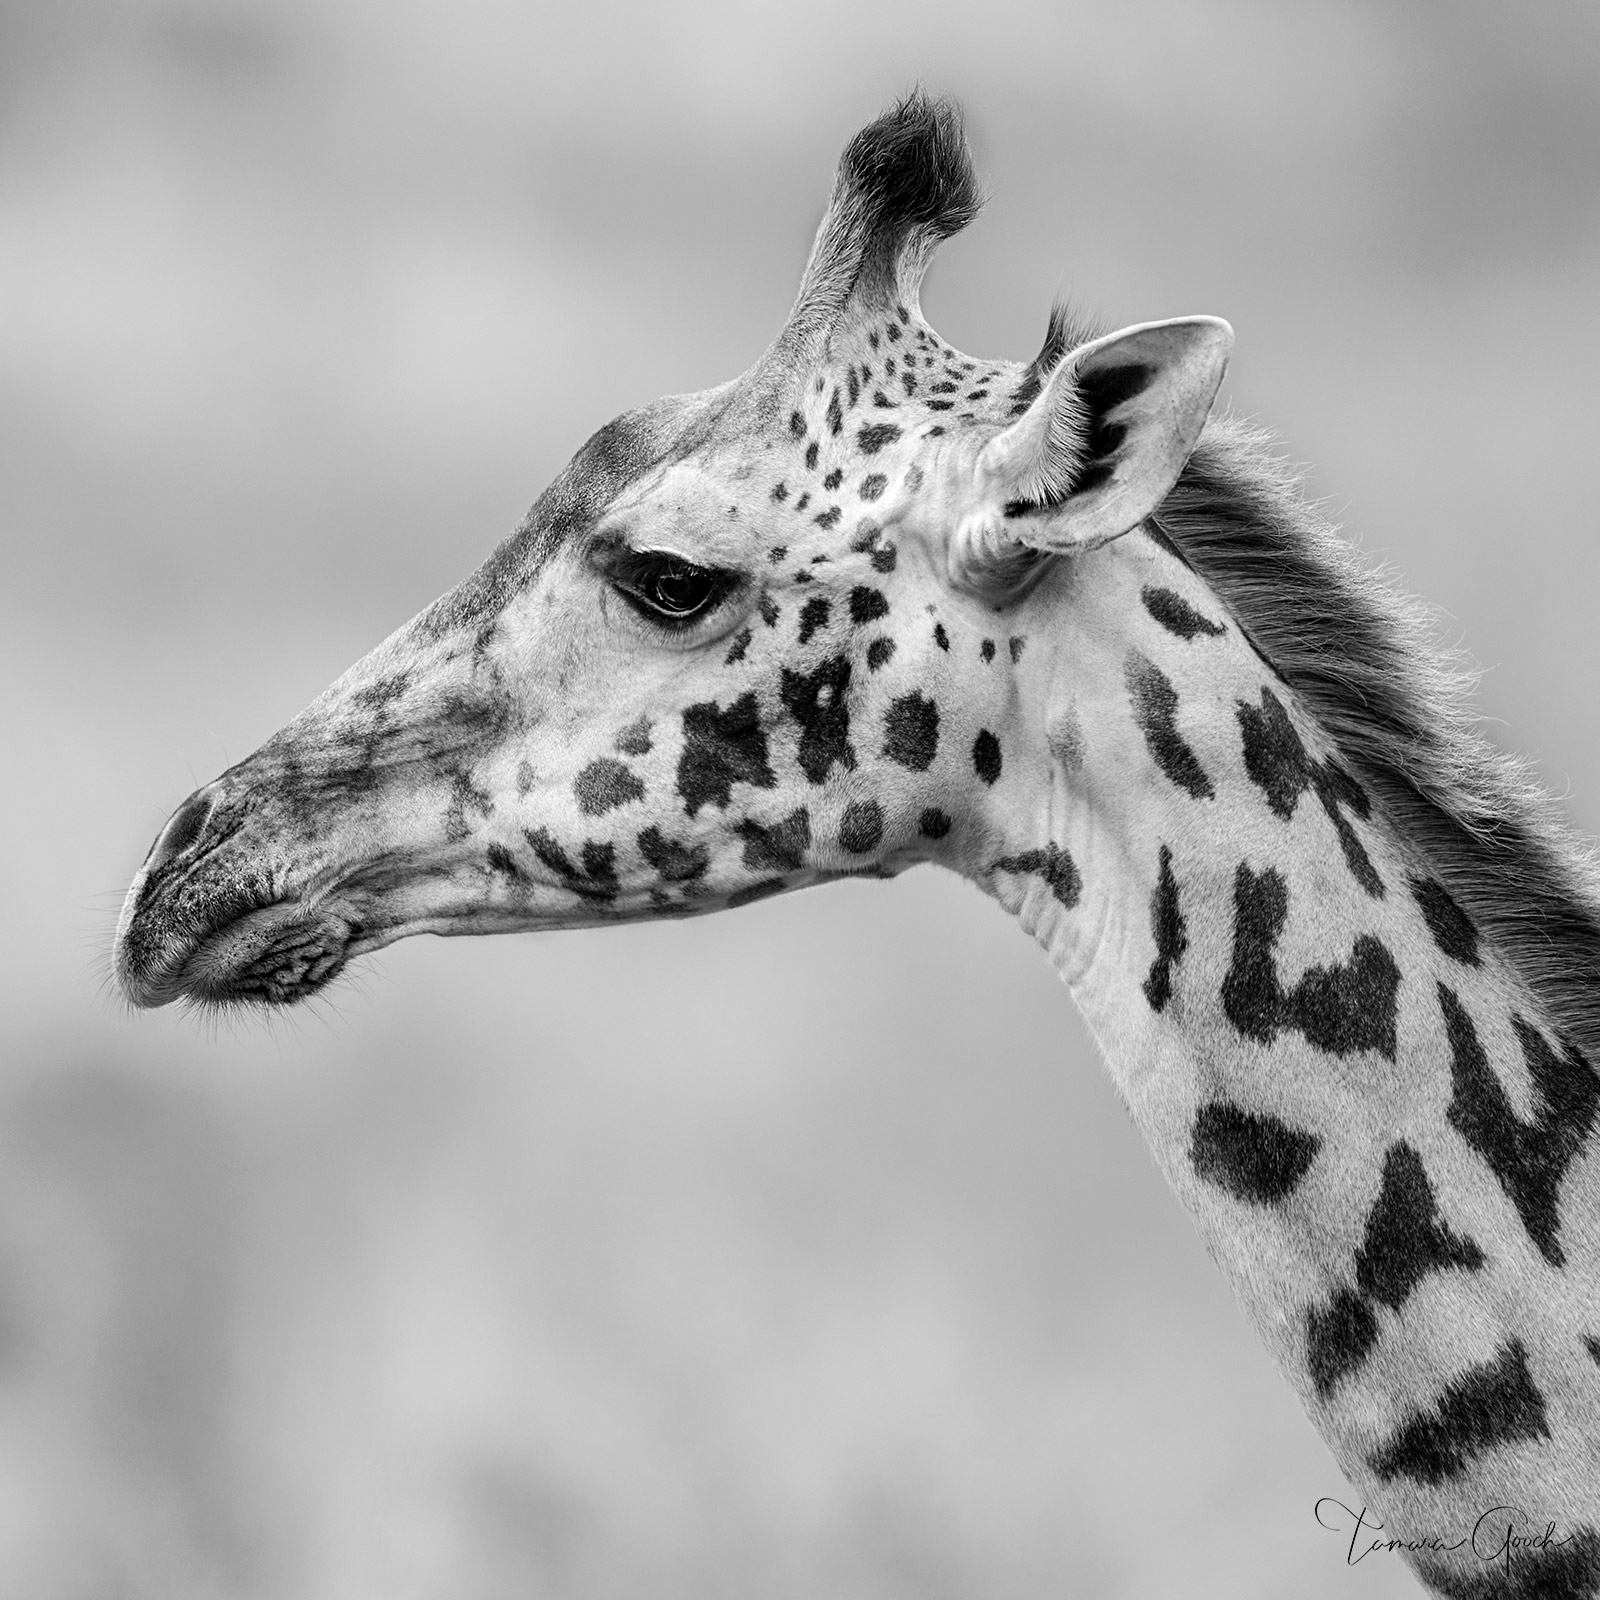 Black and white Fine Art Limited Edition wildlife print of a giraffe facing left by Tamara Gooch.